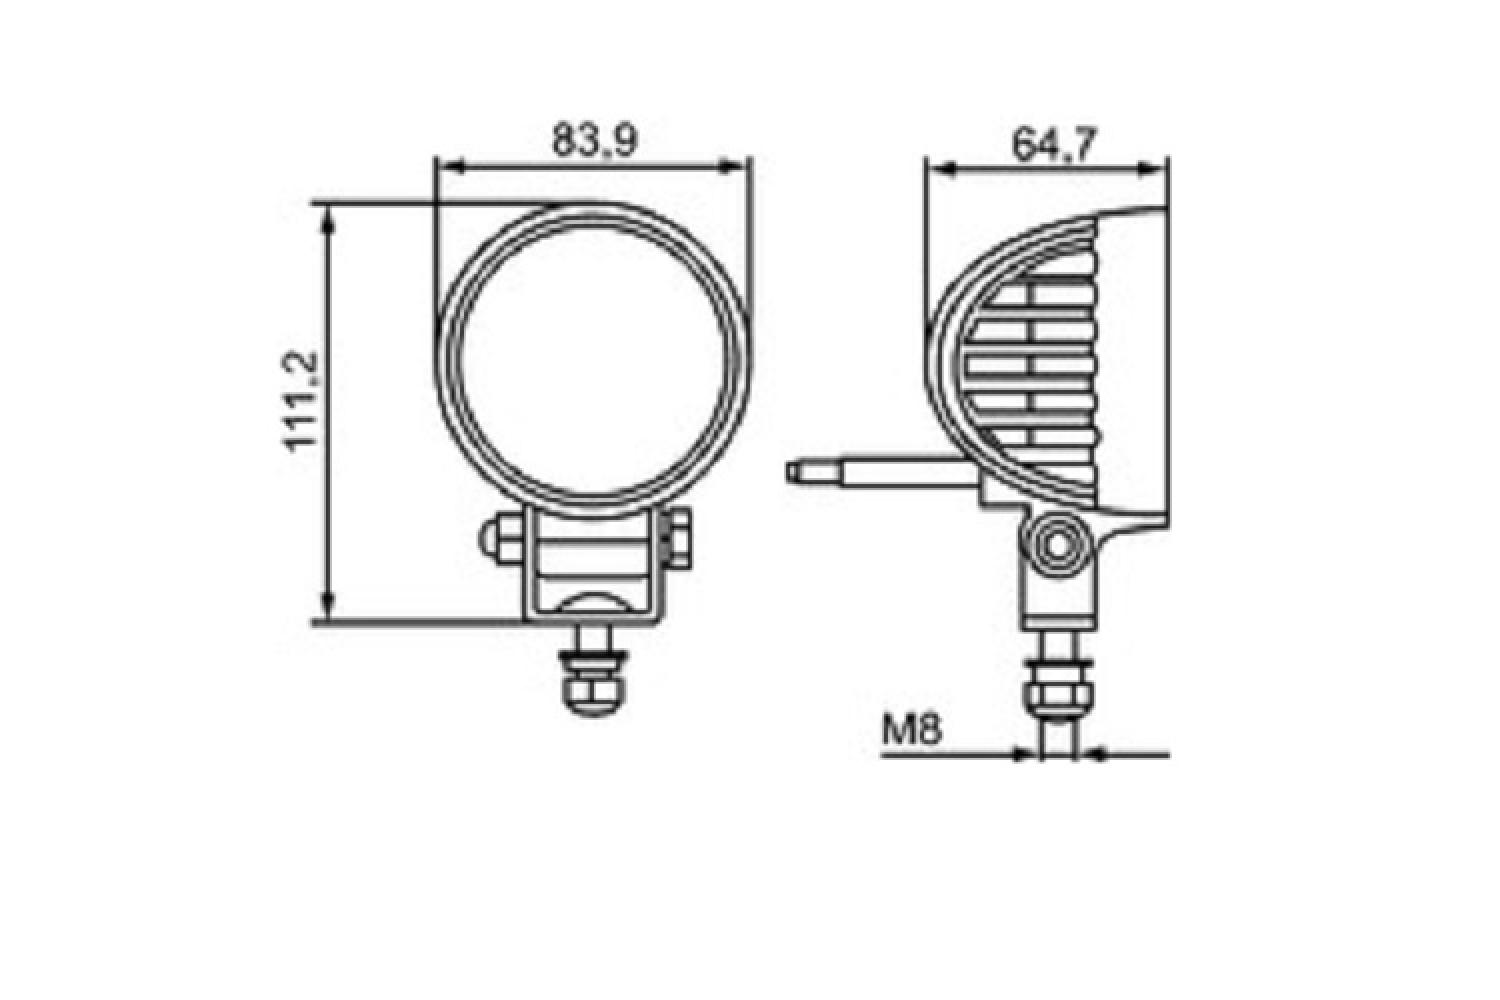 HELLA - LED-Arbeitsscheinwerfer - Valuefit SQ1800 - 12/24V - 1GA 357  116-001 : : Auto & Motorrad